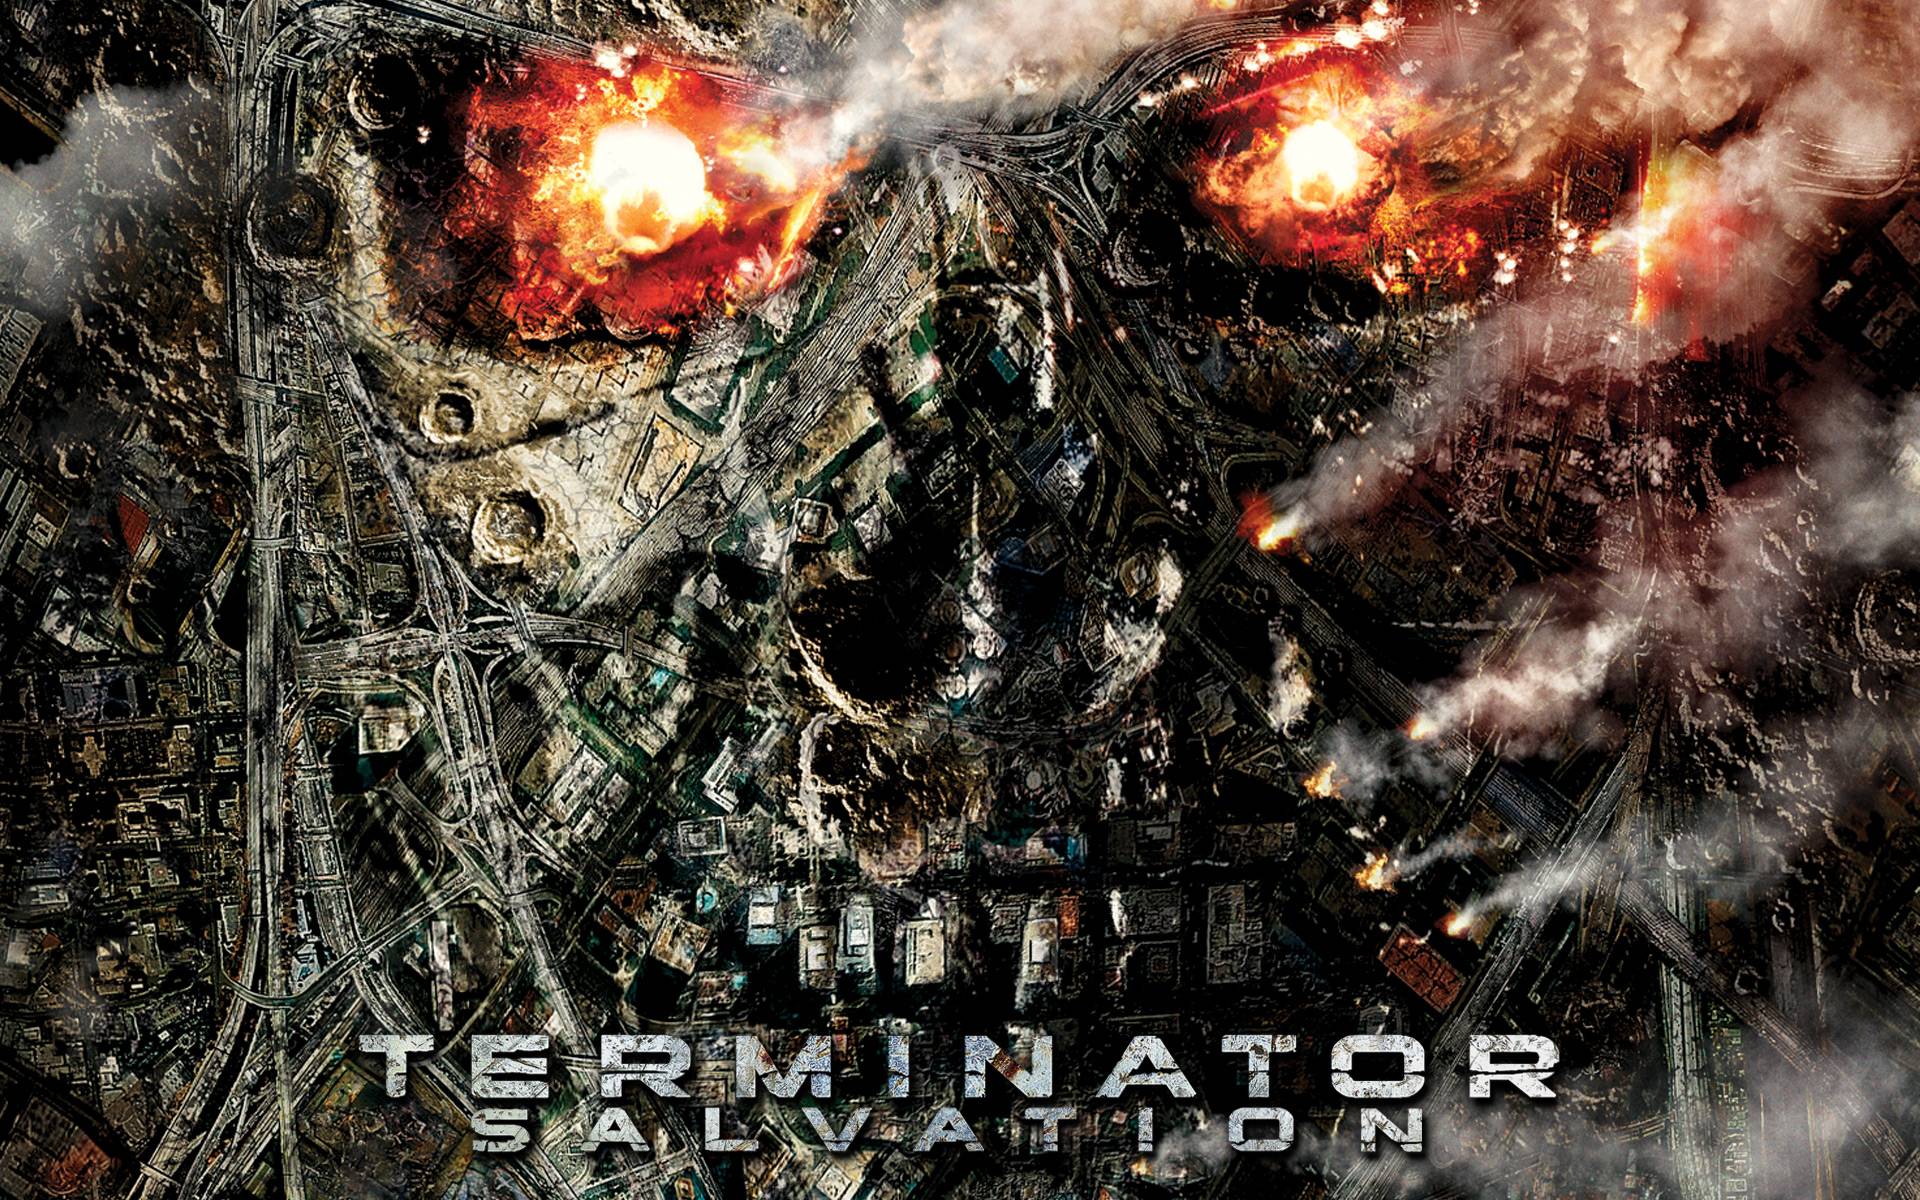 HD Wallpaper Terminator Salvation P X